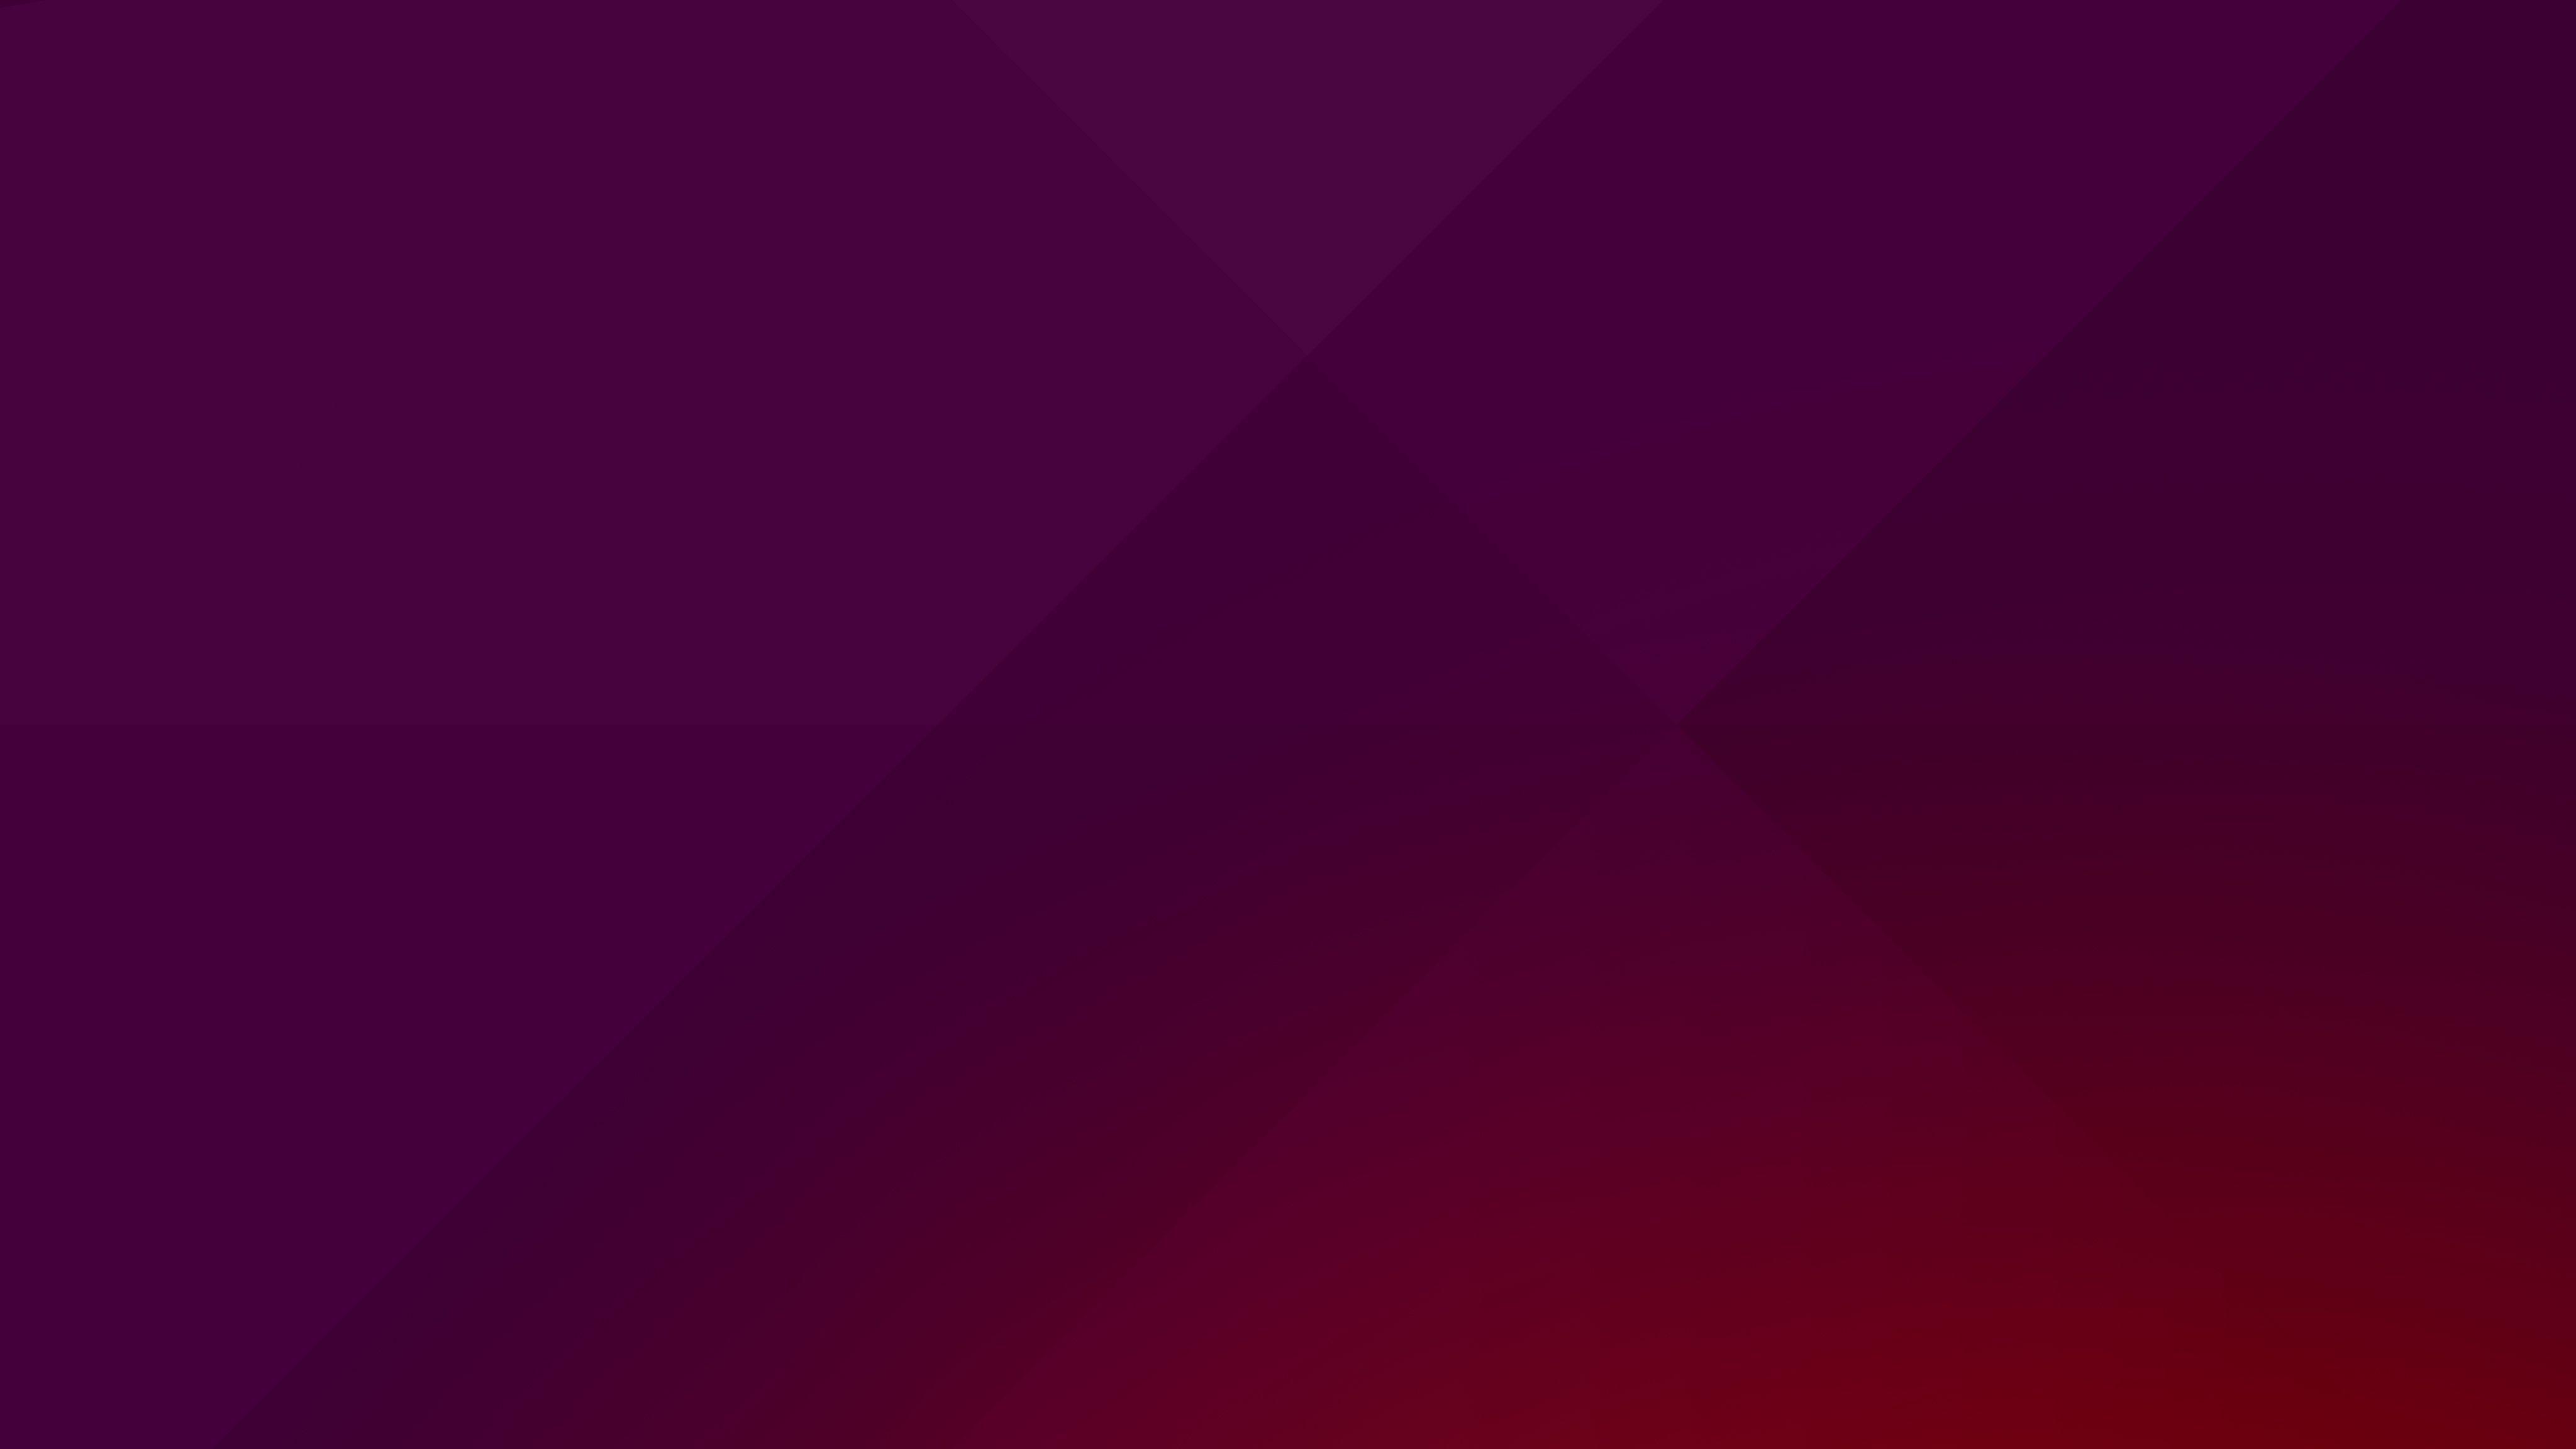 Every Default Ubuntu Wallpaper, Ever [Gallery]